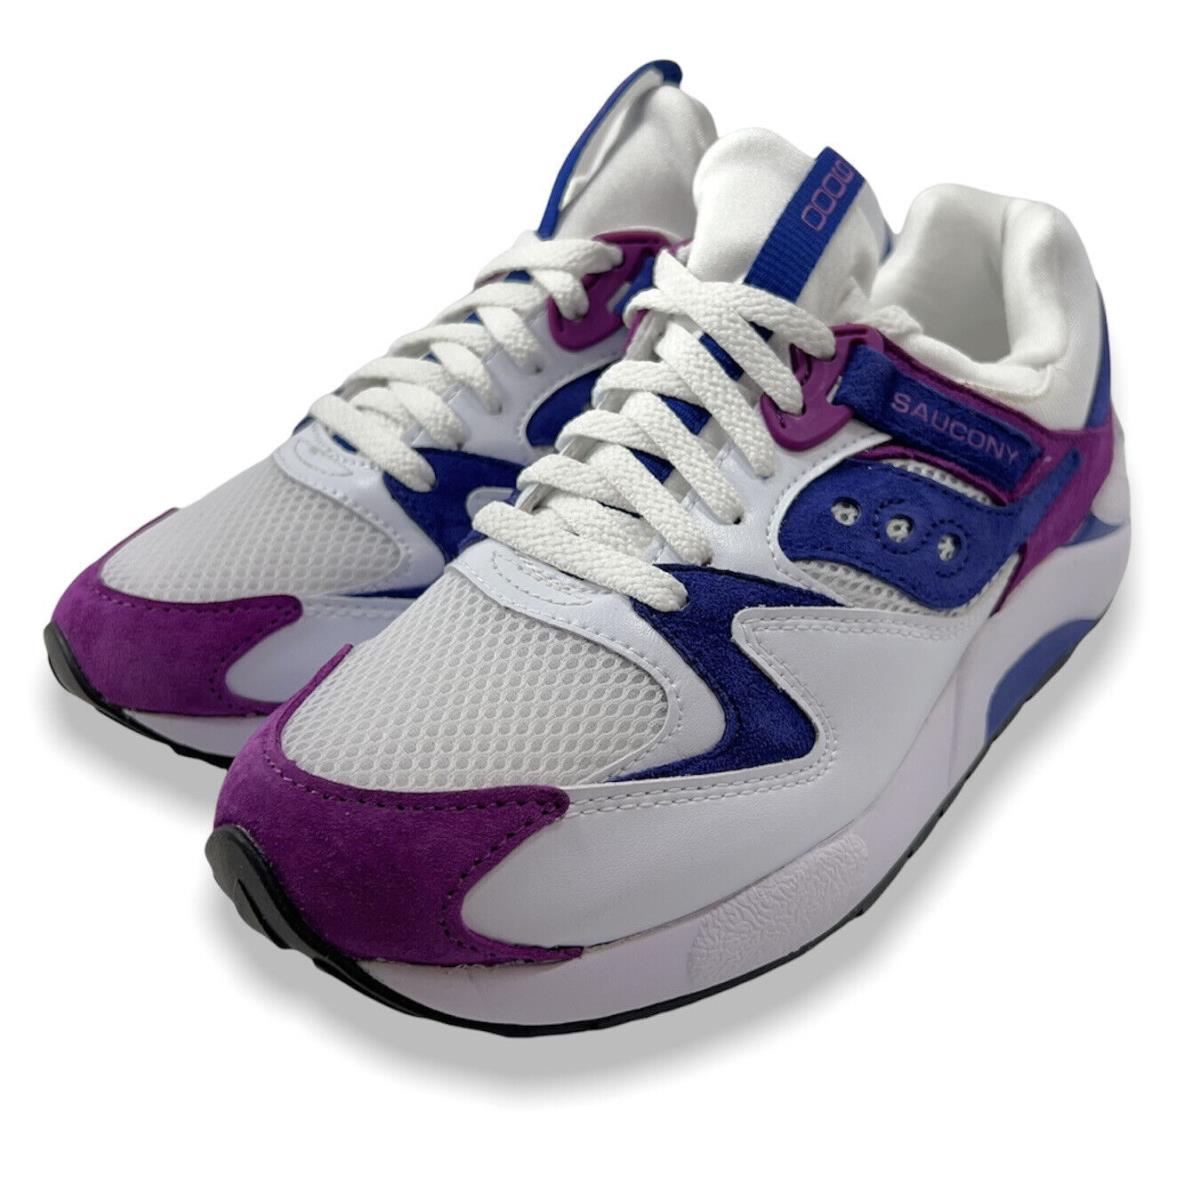 Saucony Mens Multicolor S70439-2 Grid 9000 Lace Up Athletic Sneaker Shoes 8 M